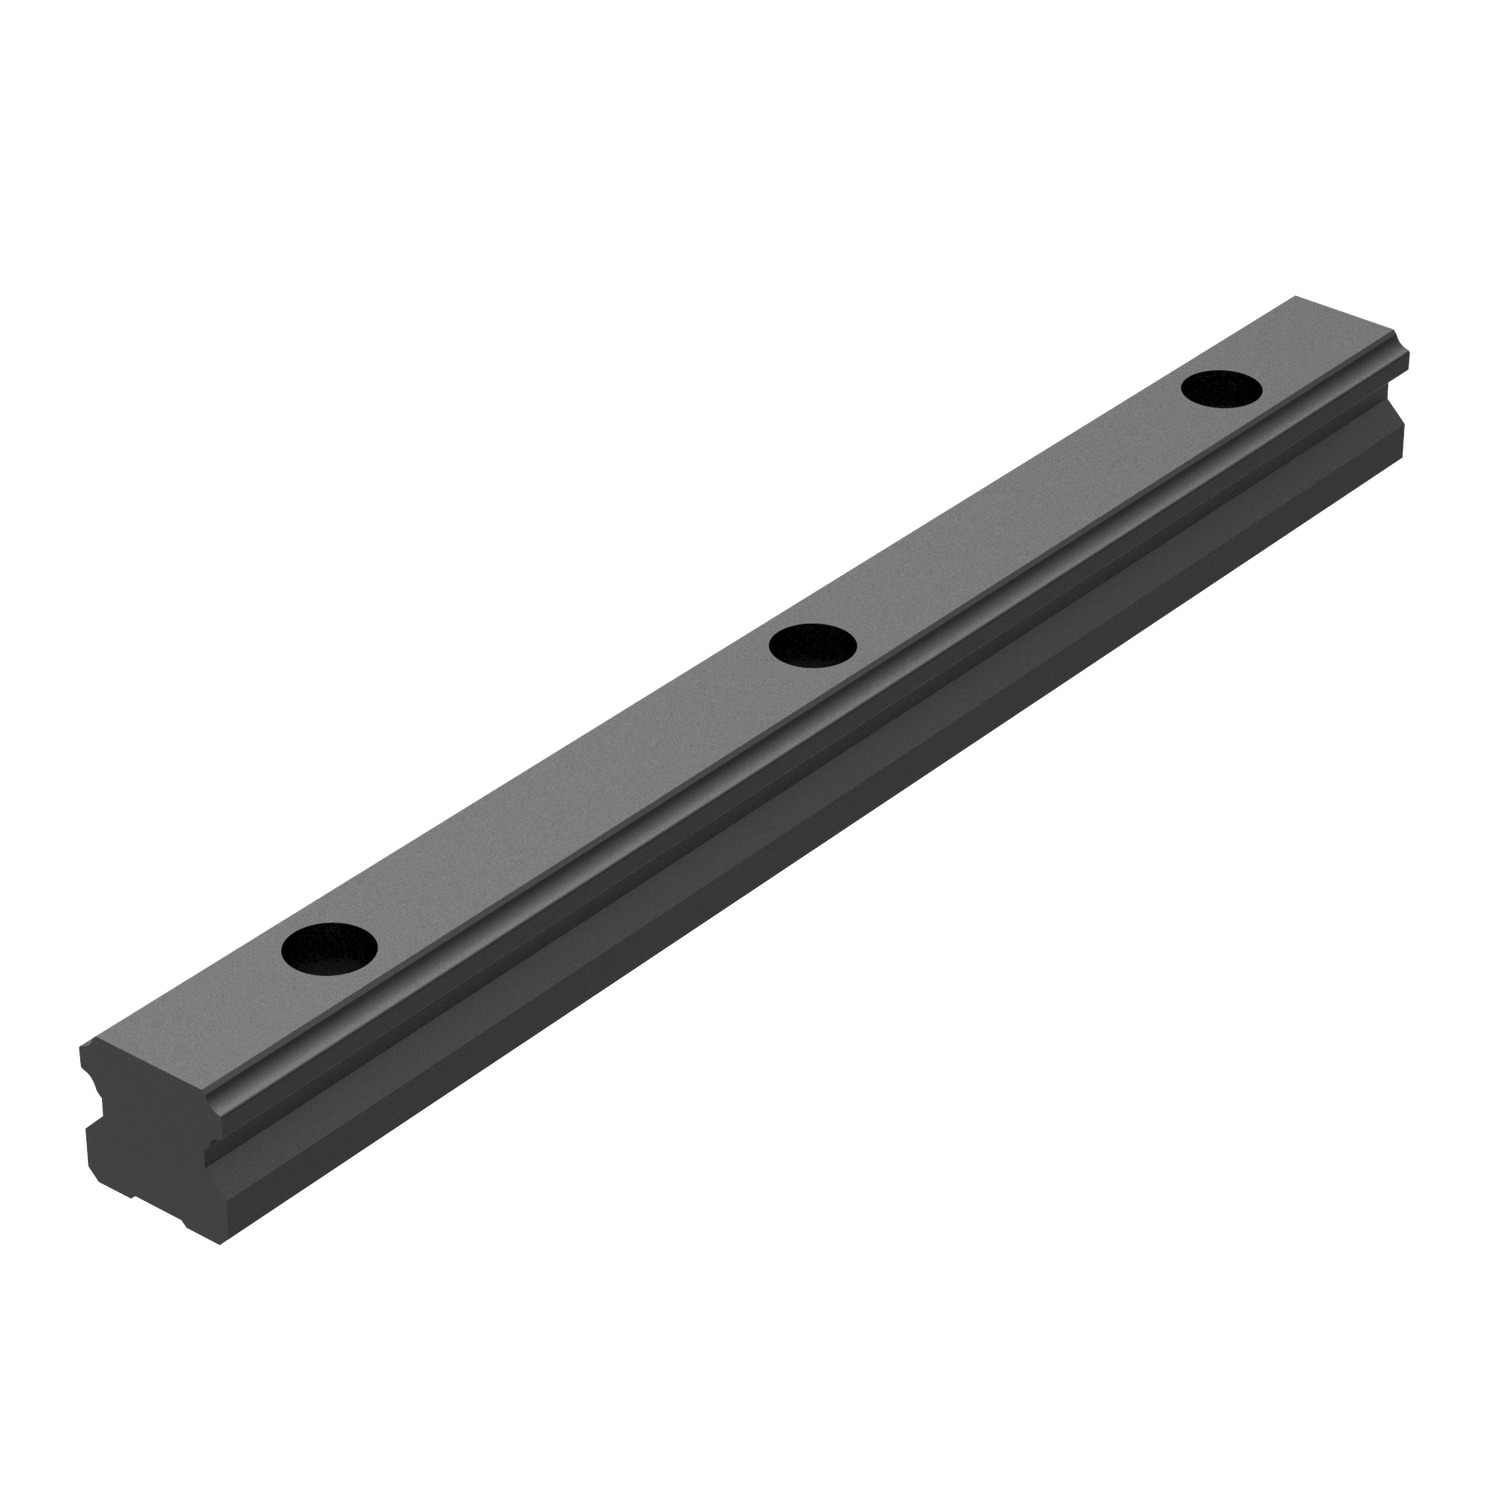 L1016.BL20-0940 Black Linear guide rail 20mm 940 Black Oxide